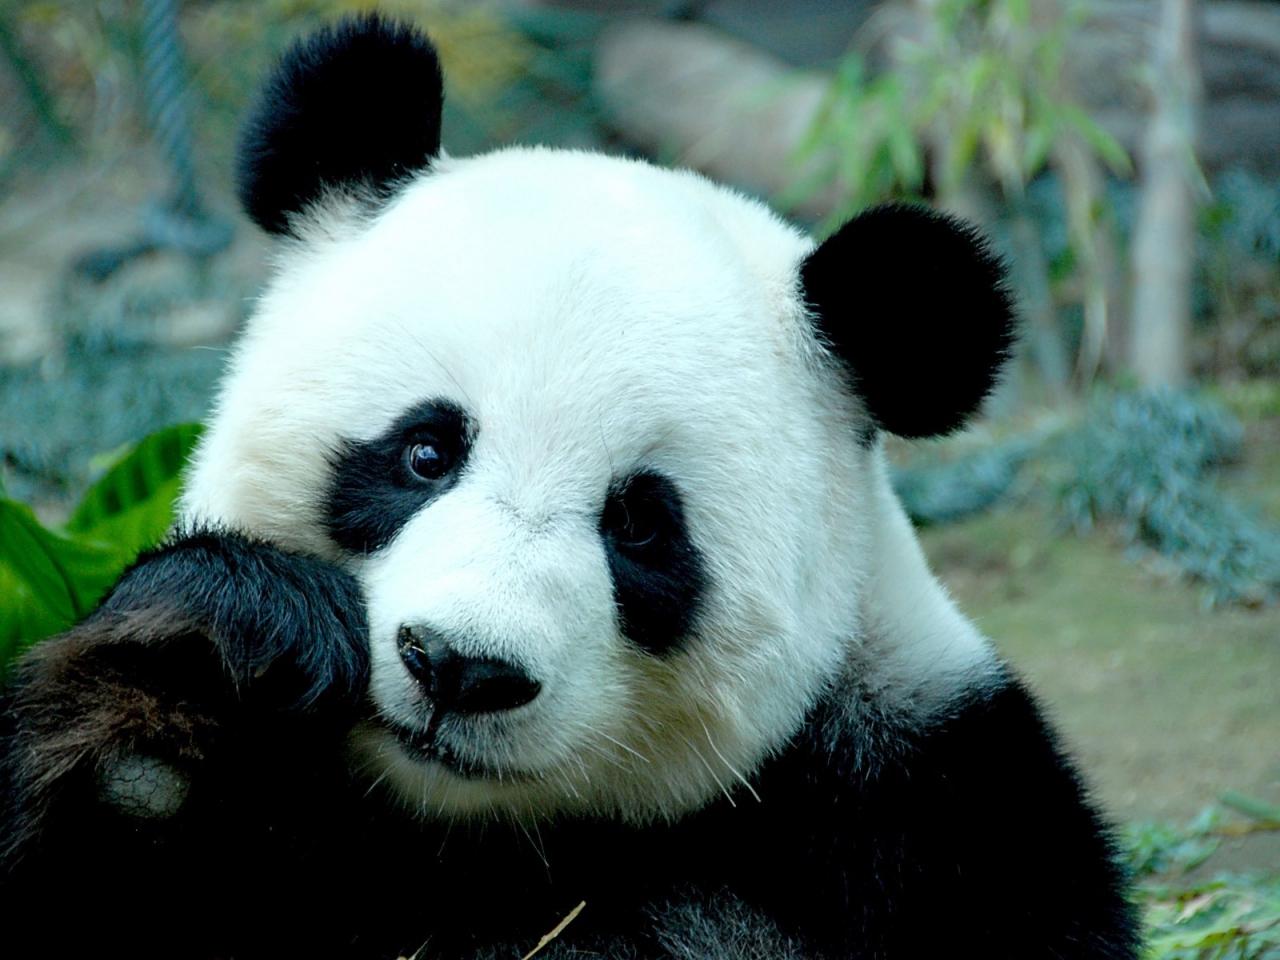 Sad Panda Bear for 1280 x 960 resolution